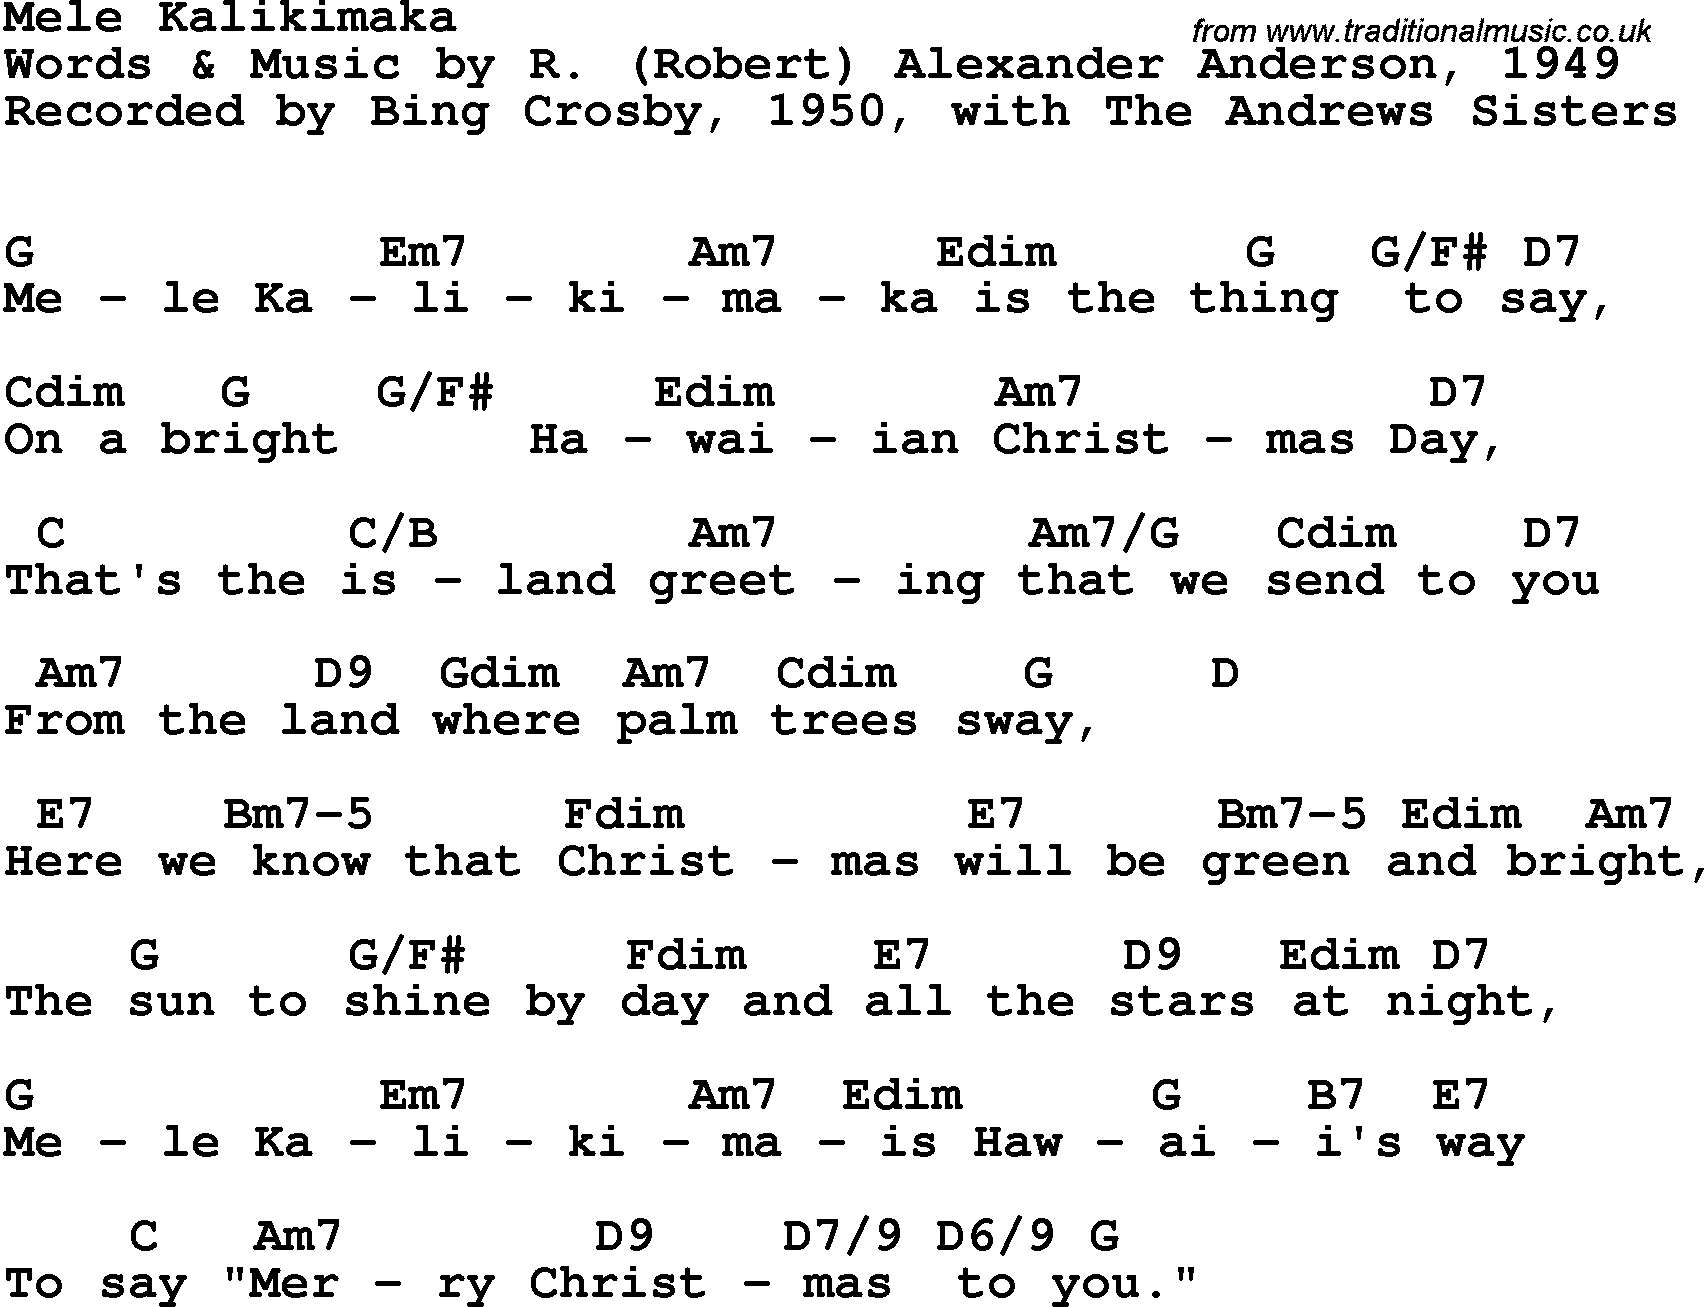 Song Lyrics with guitar chords for Mele Kalikimaka - Bing Crosby, 1950